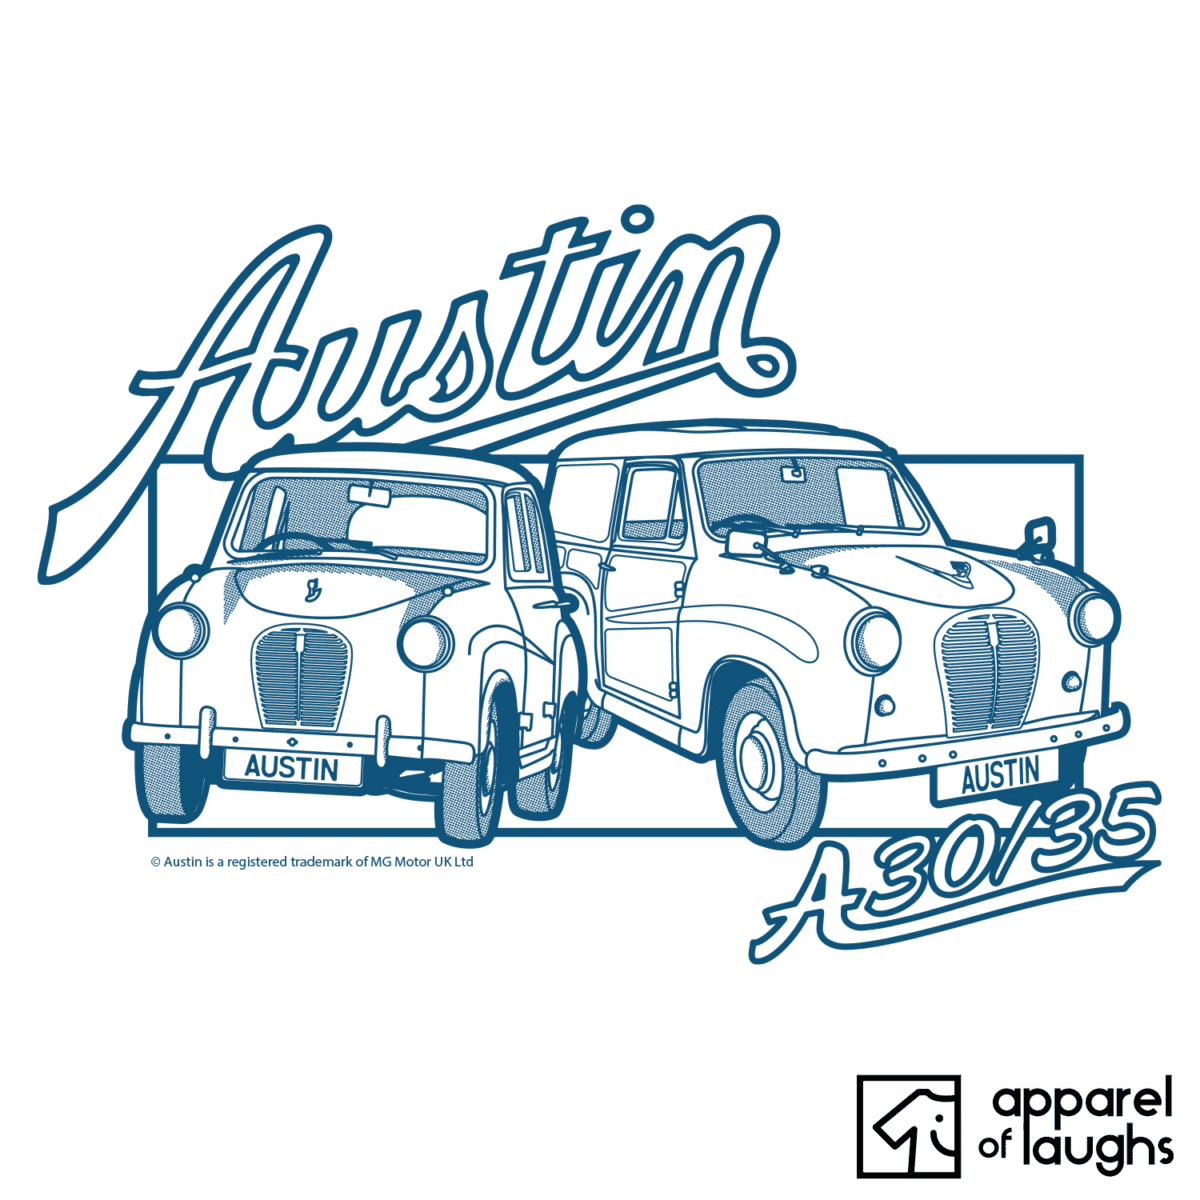 Austin A30 A35 Van Car Brand Vintage Retro British Motoring Heritage T-Shirt Design White